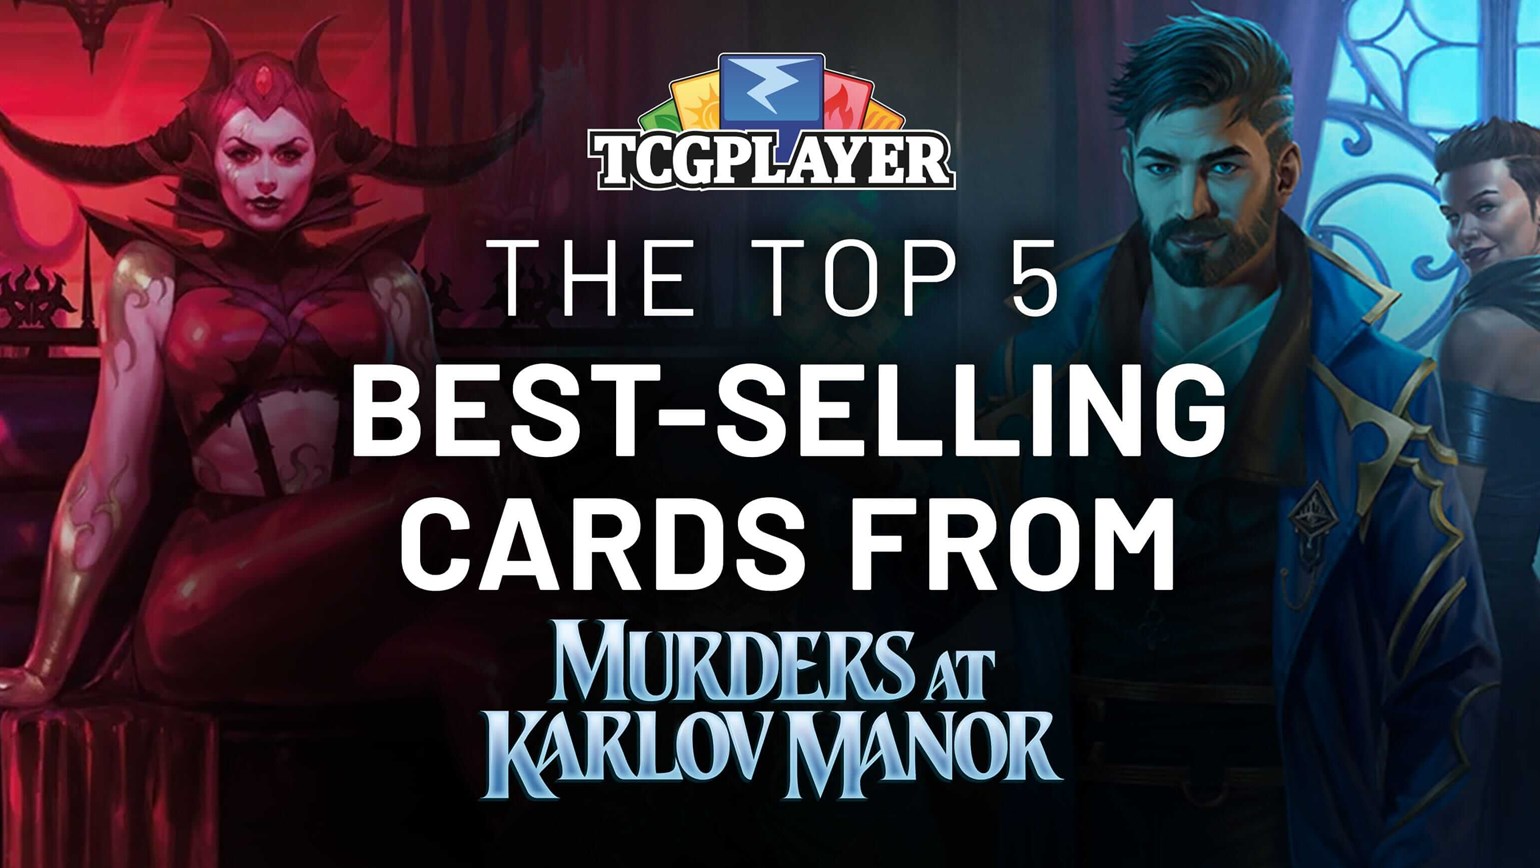 The Top 5 Best-Selling Cards of Murders at Karlov Manor